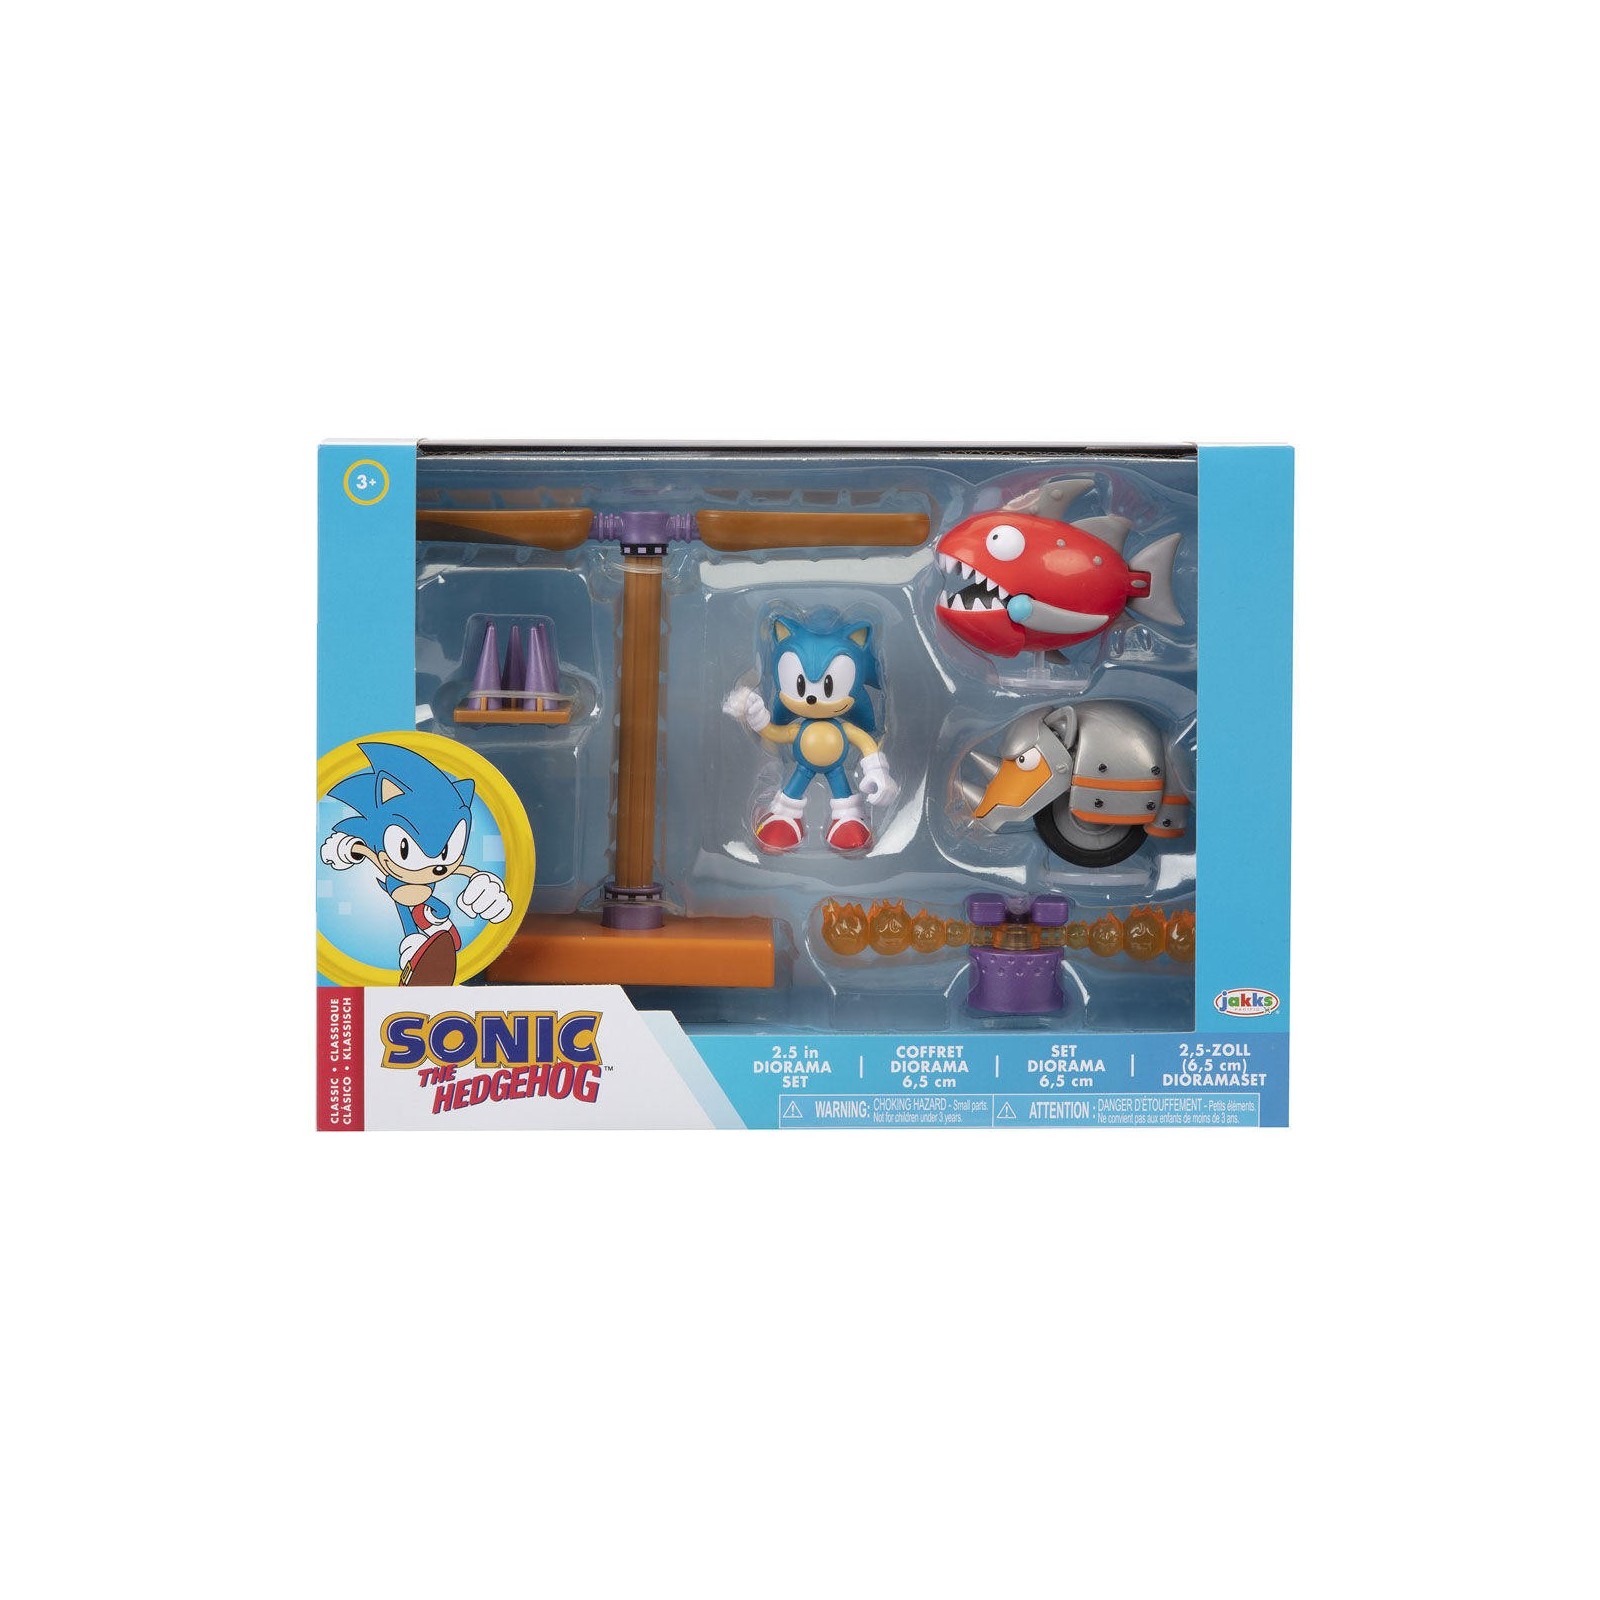 Blister Diorama Wave 2 Sonic The Hedgehog 6Cm